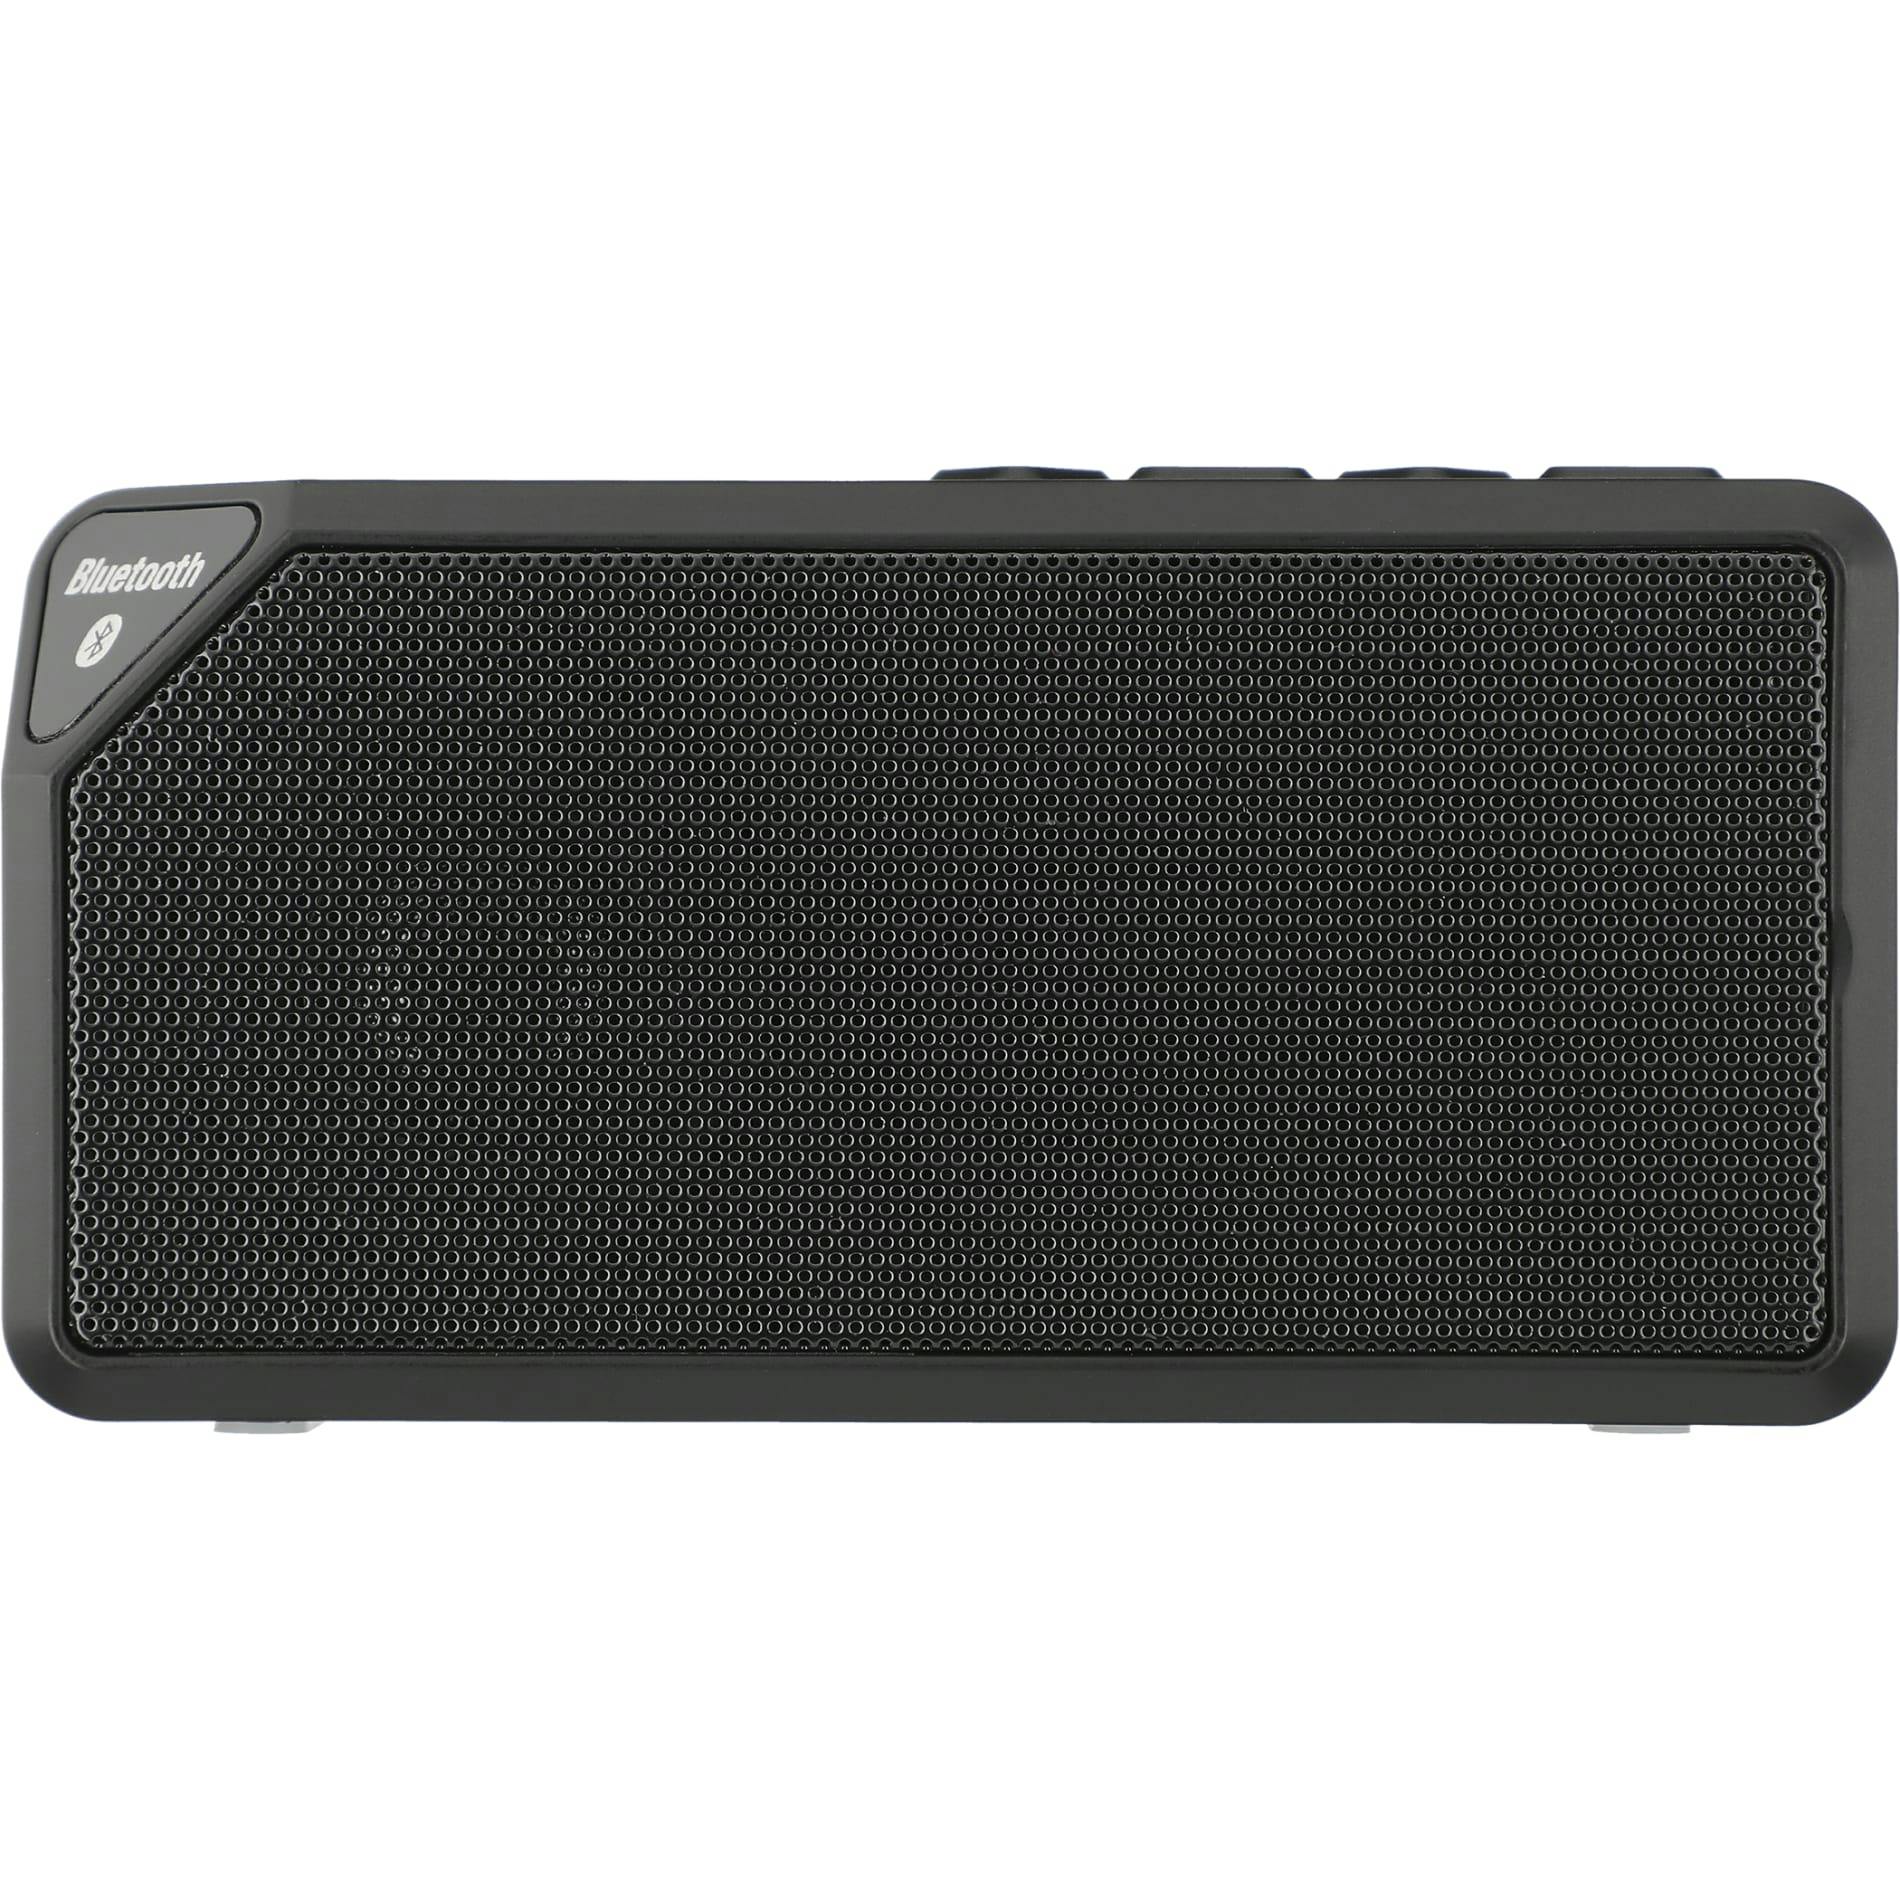 Jabba Bluetooth Speaker - additional Image 6